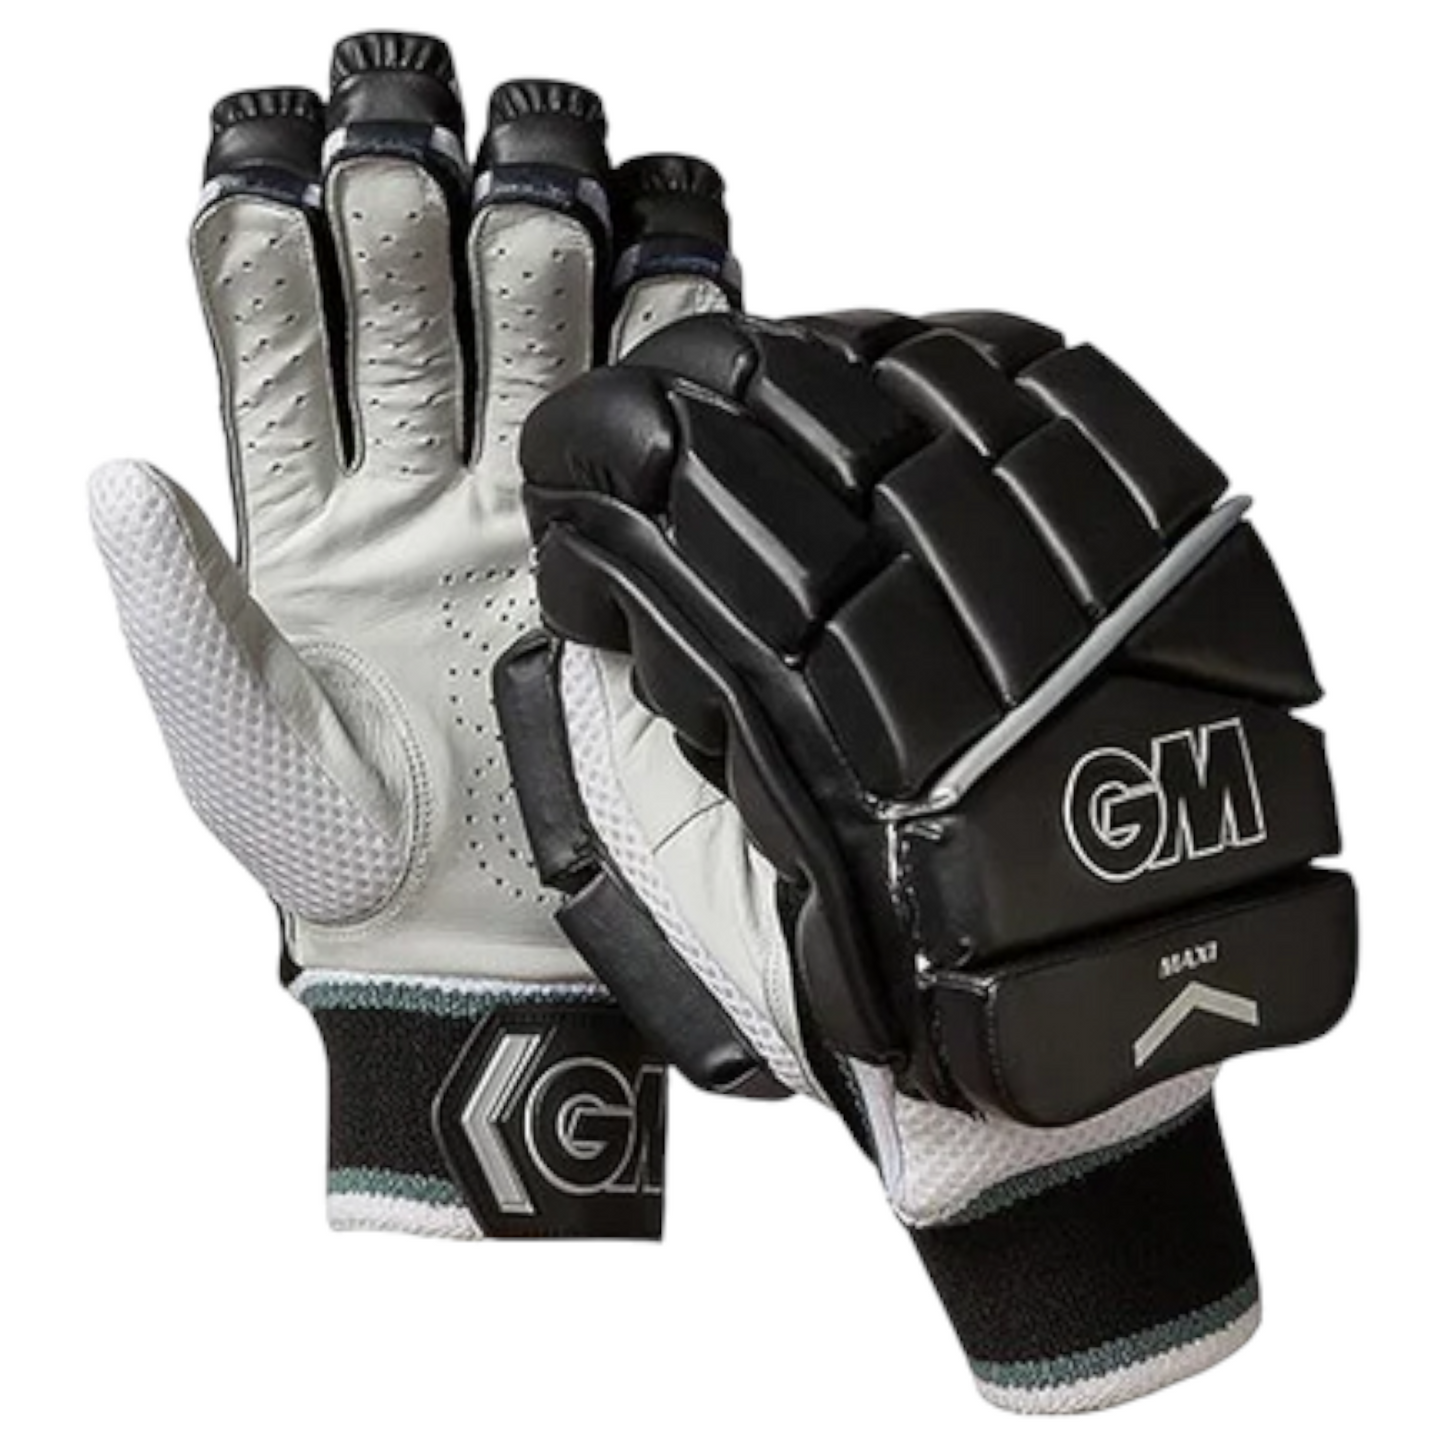 GM MAXI Gloves Black